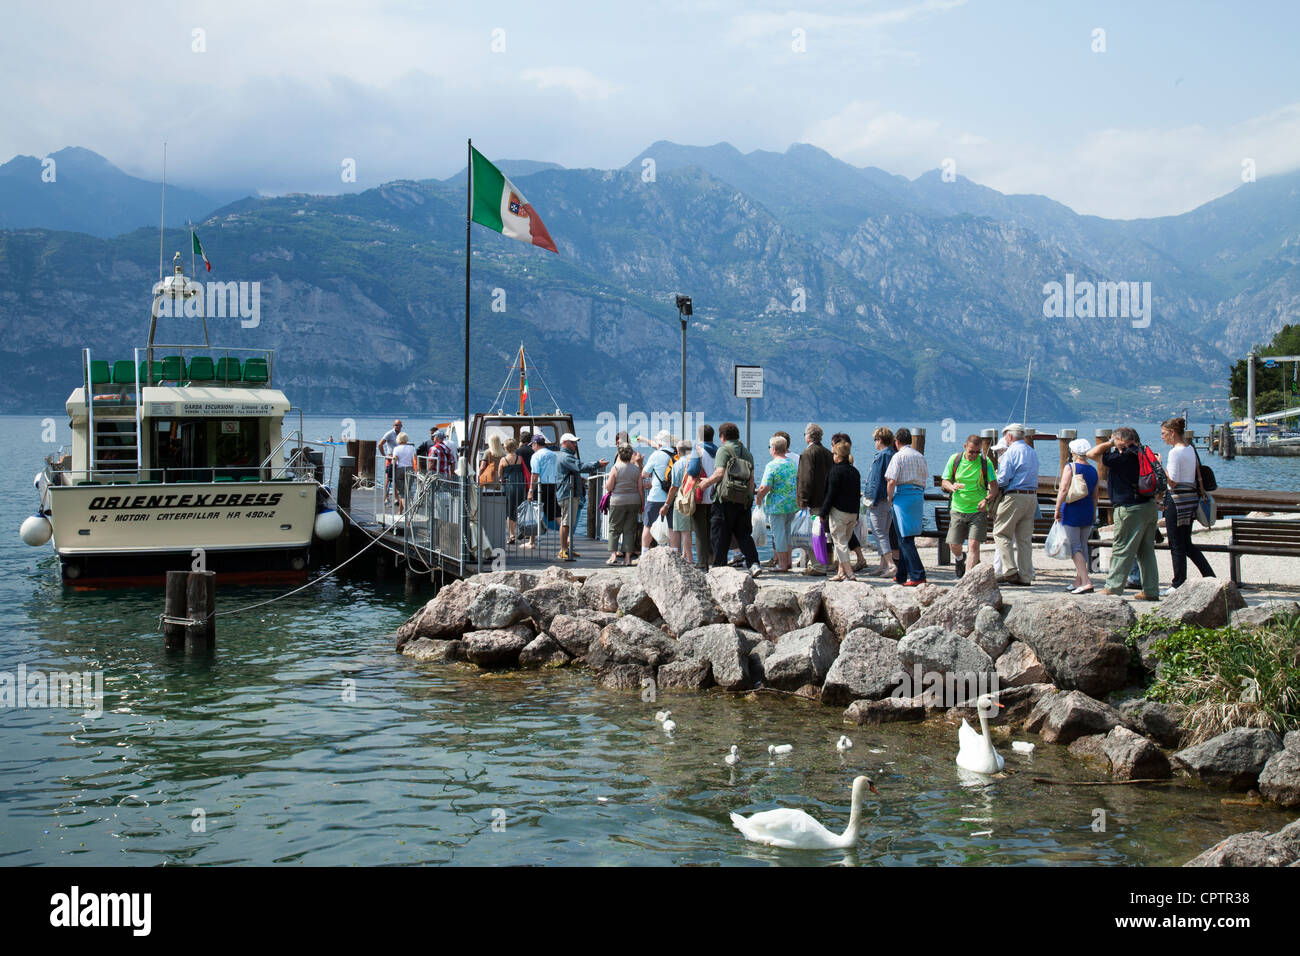 A group of tourists waiting to board an Italian tourist boat Lake Garda Italy Stock Photo